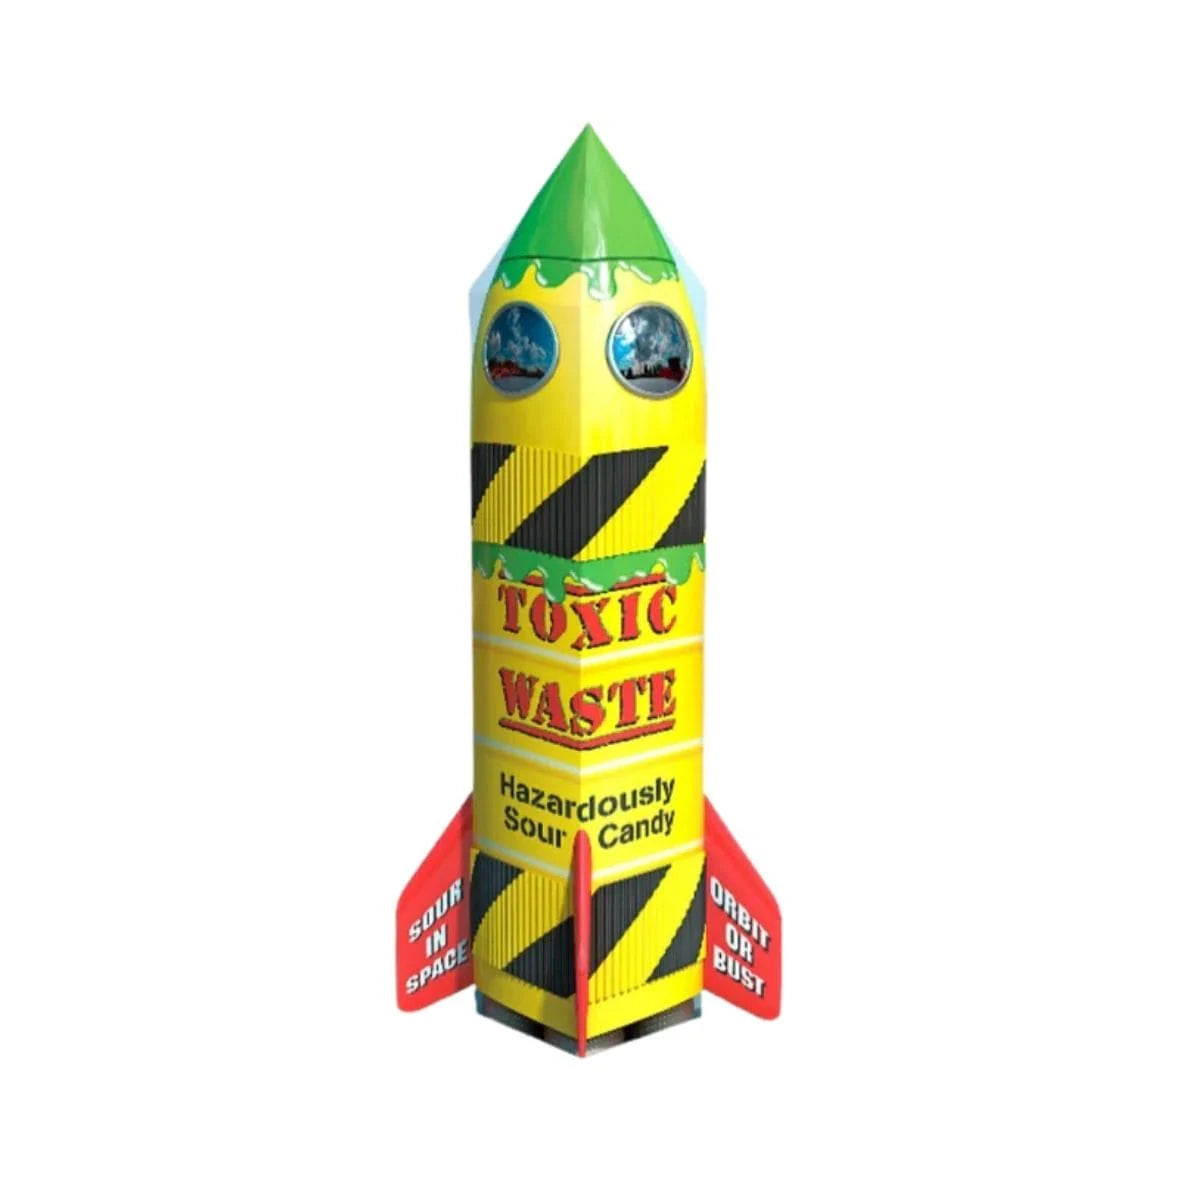 Toxic waste rocket